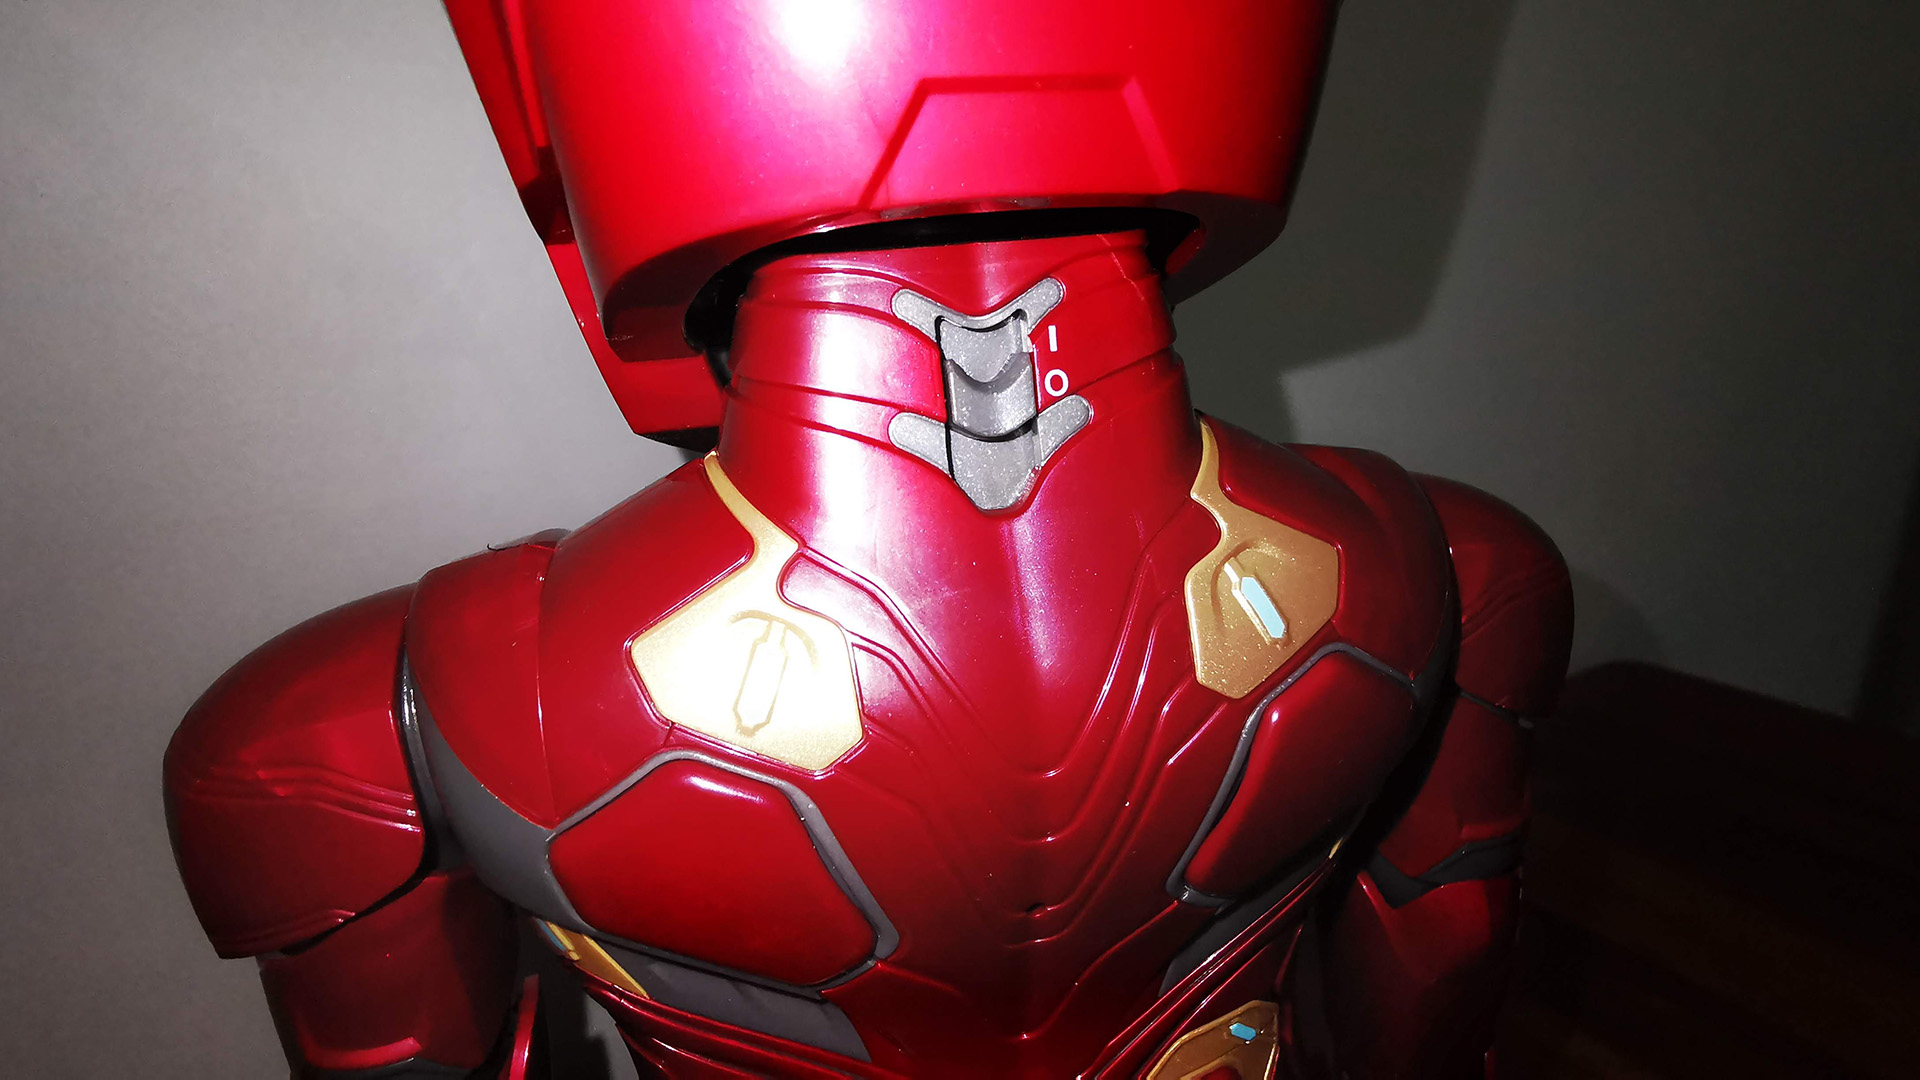 Ubtech Iron Man MK5